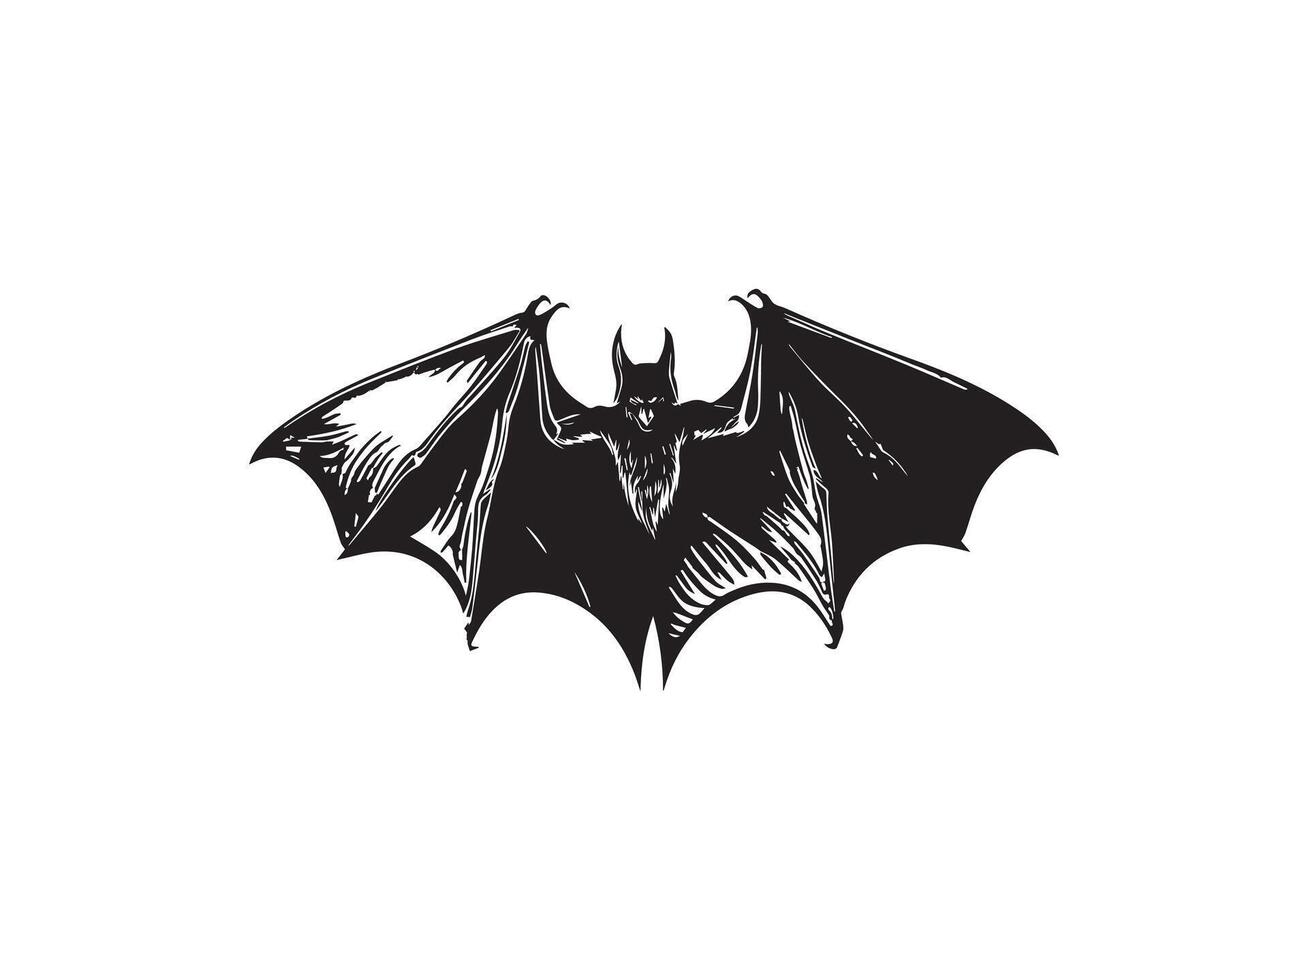 Bat icon isolated on white background. Vector illustration.